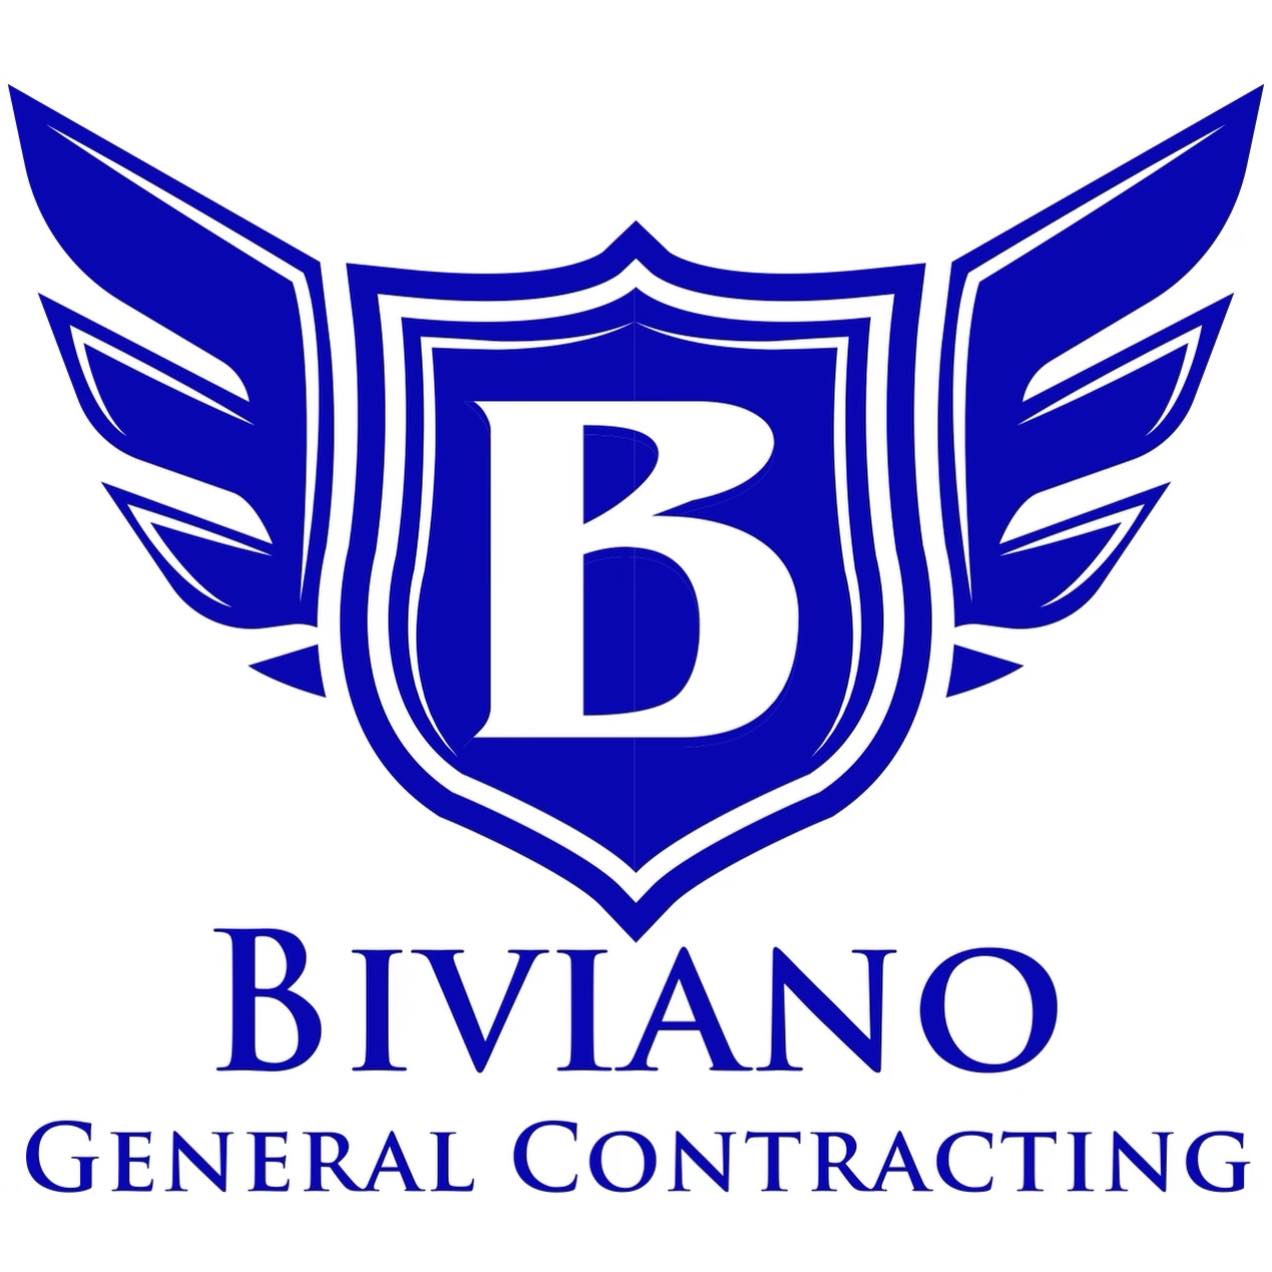 Biviano General Contracting 